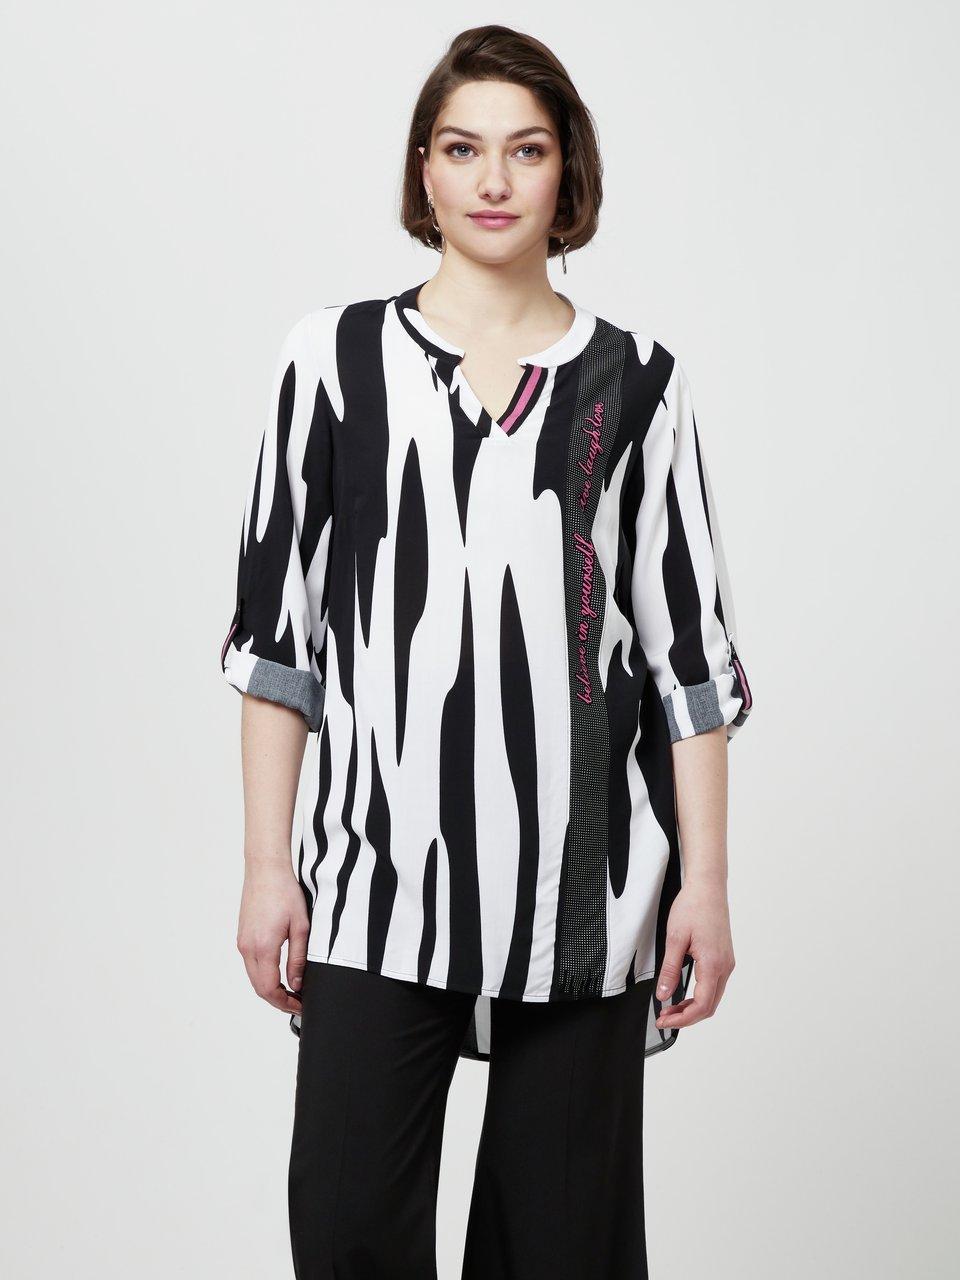 Doris Streich - Lange blouse